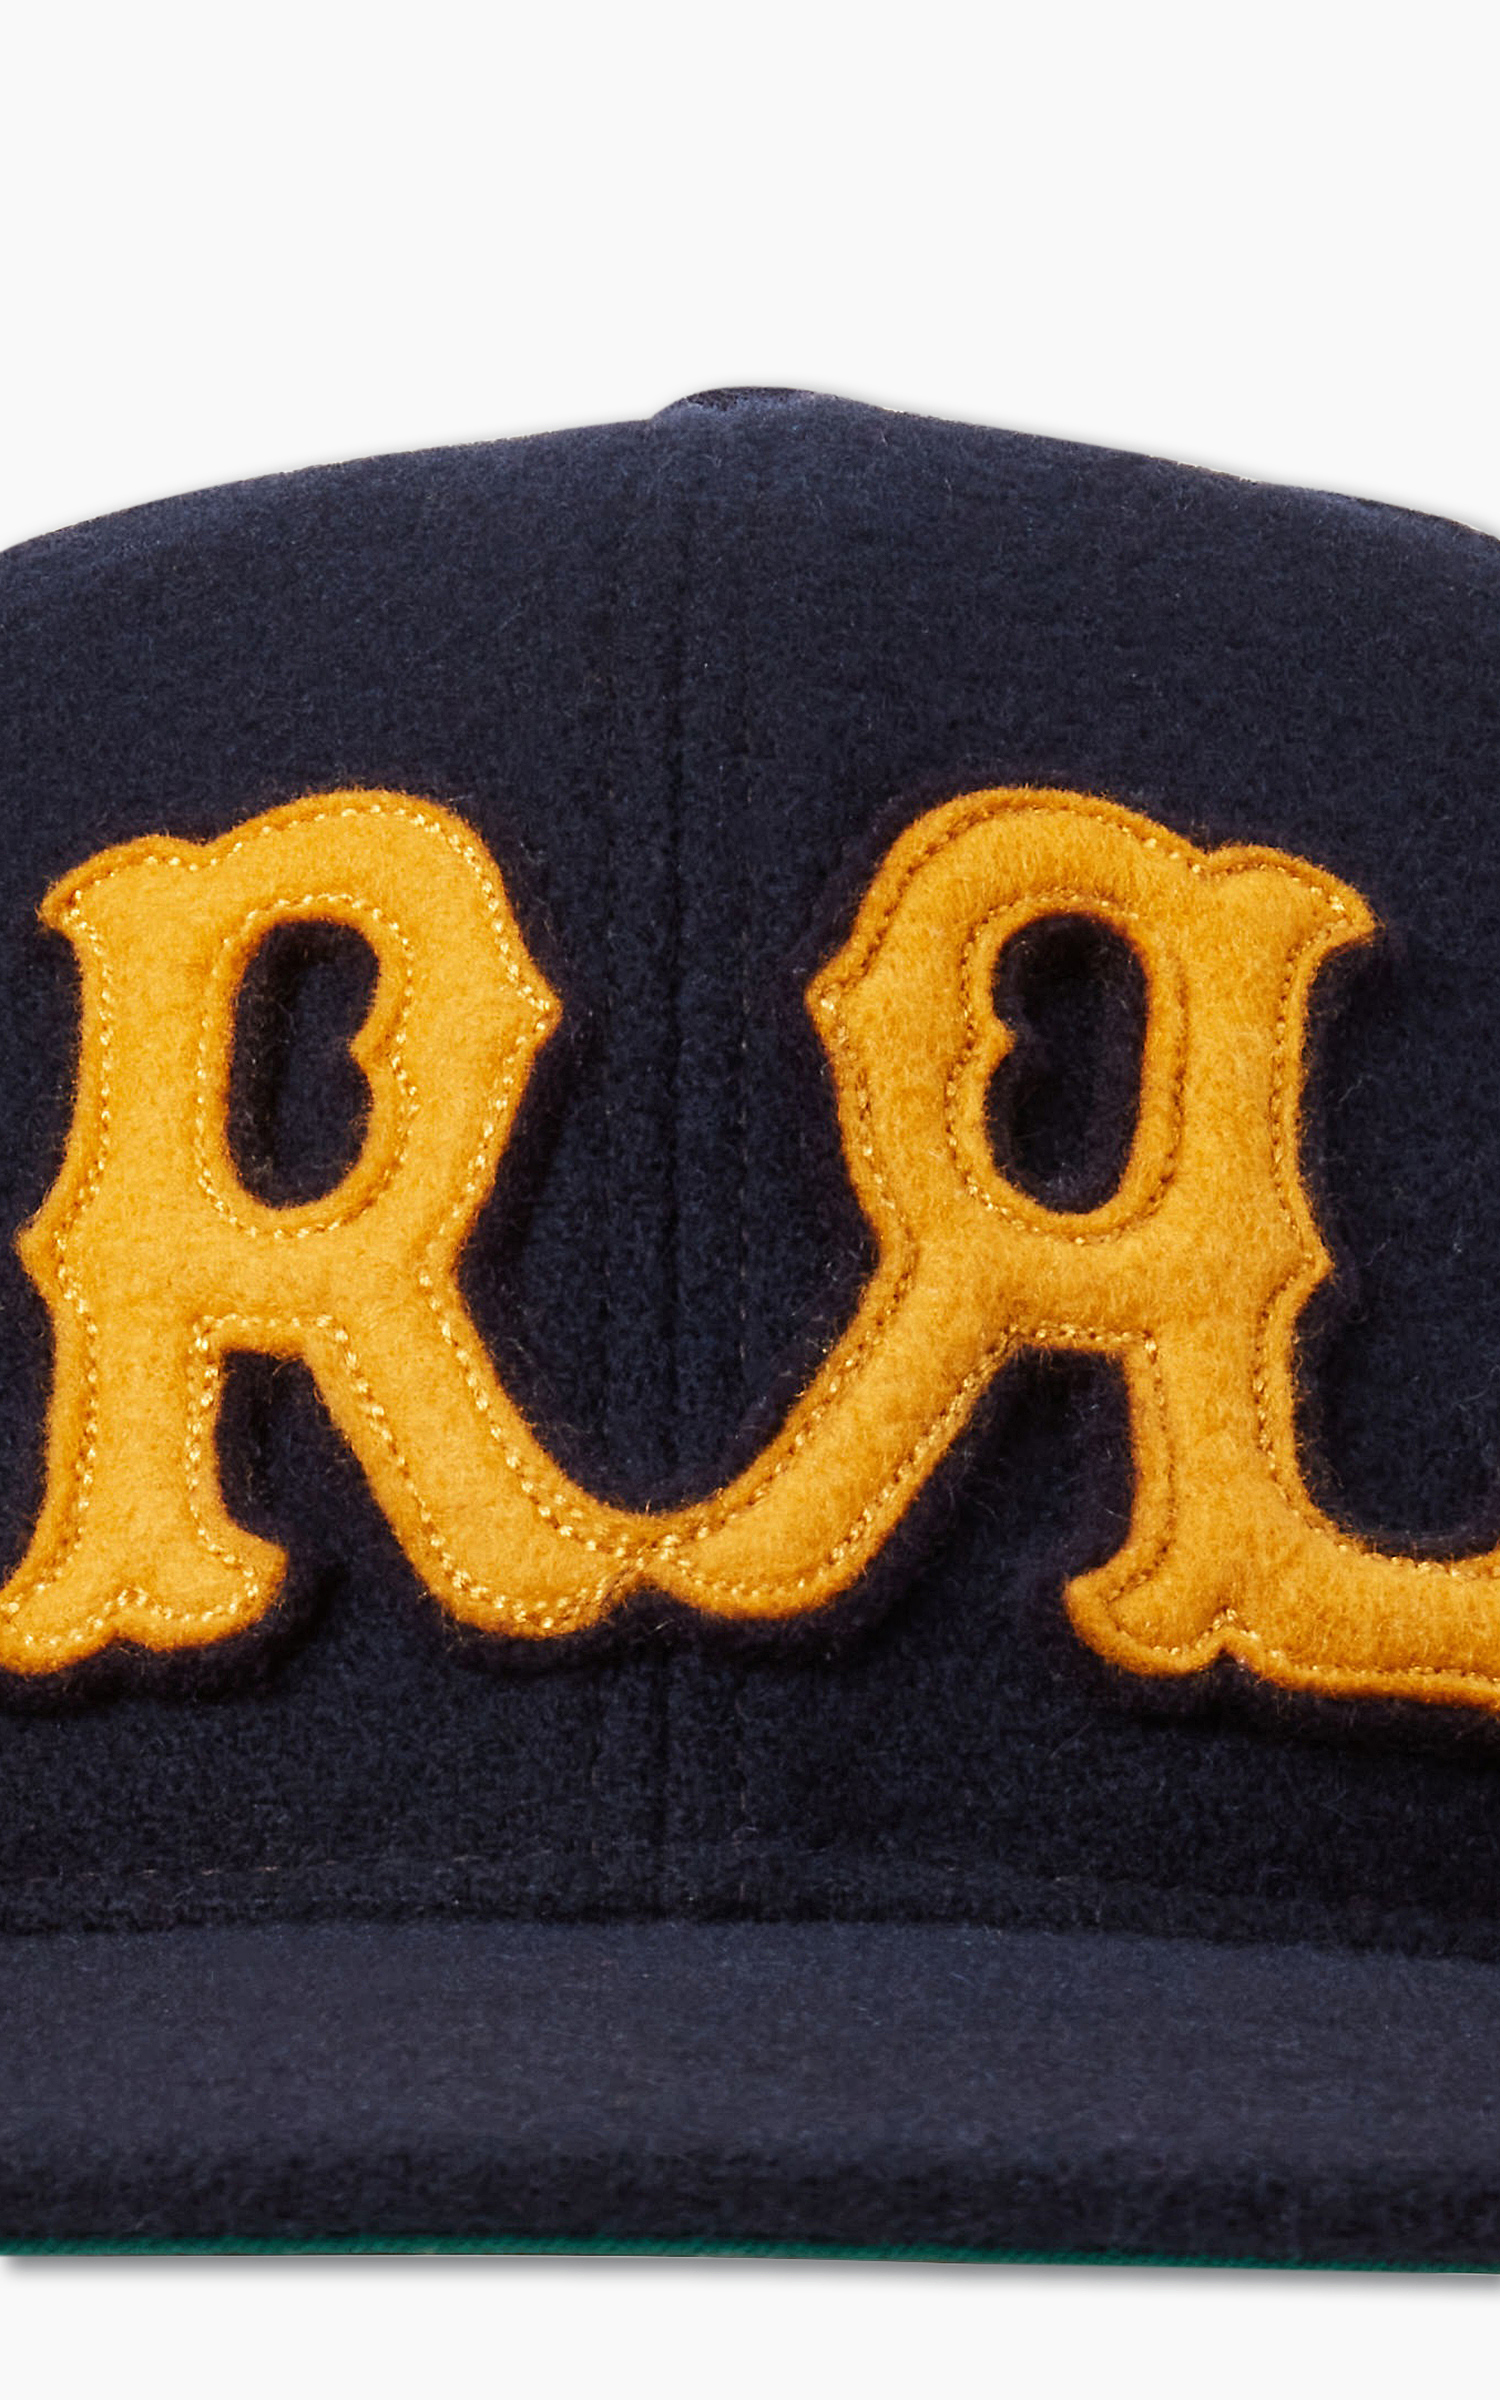 RRL 1930s Wool Ball Cap Navy | Cultizm